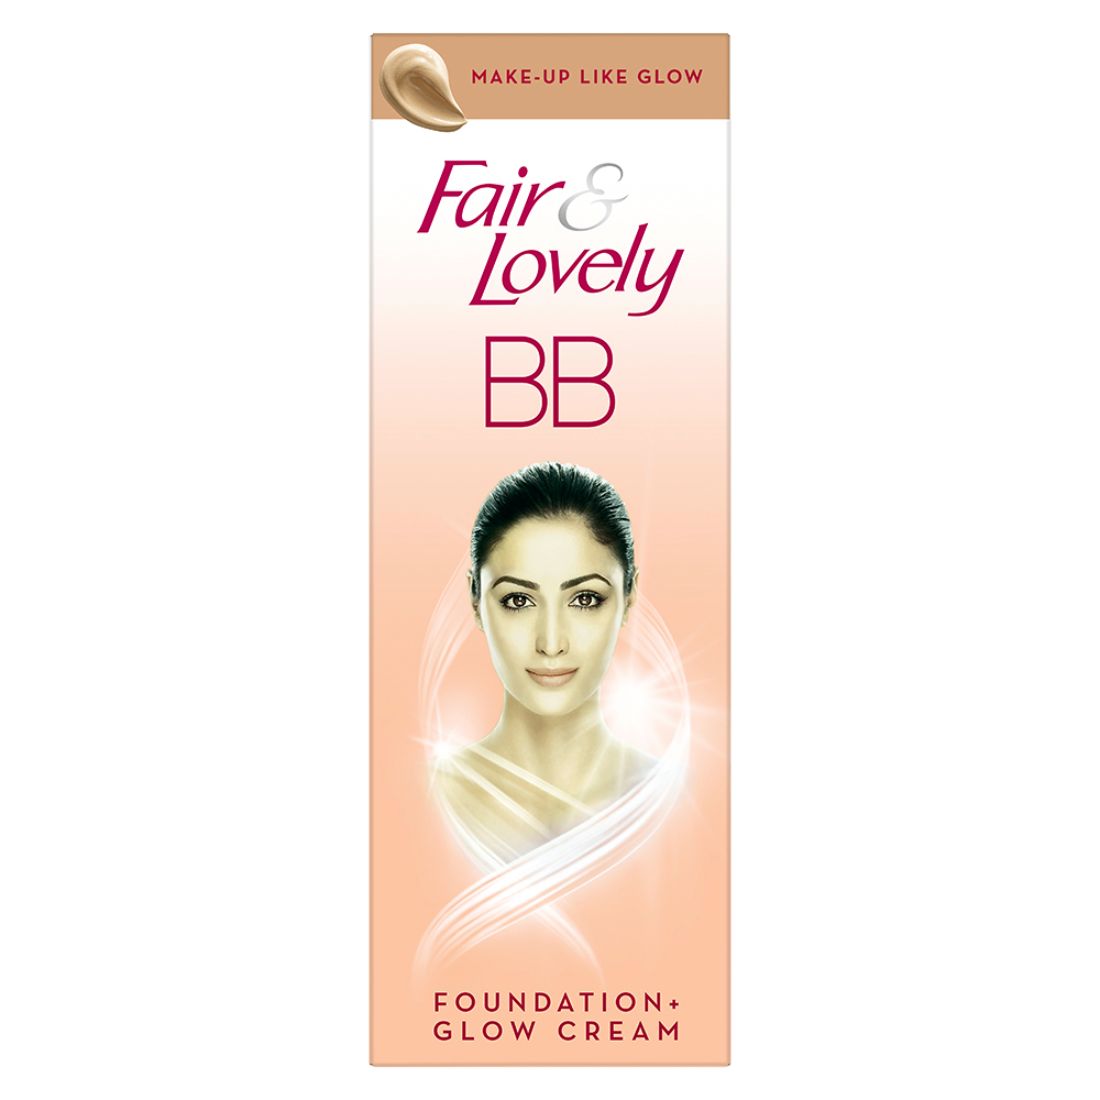 Buy Glow & Lovely BB Face Cream, 18 gm Online